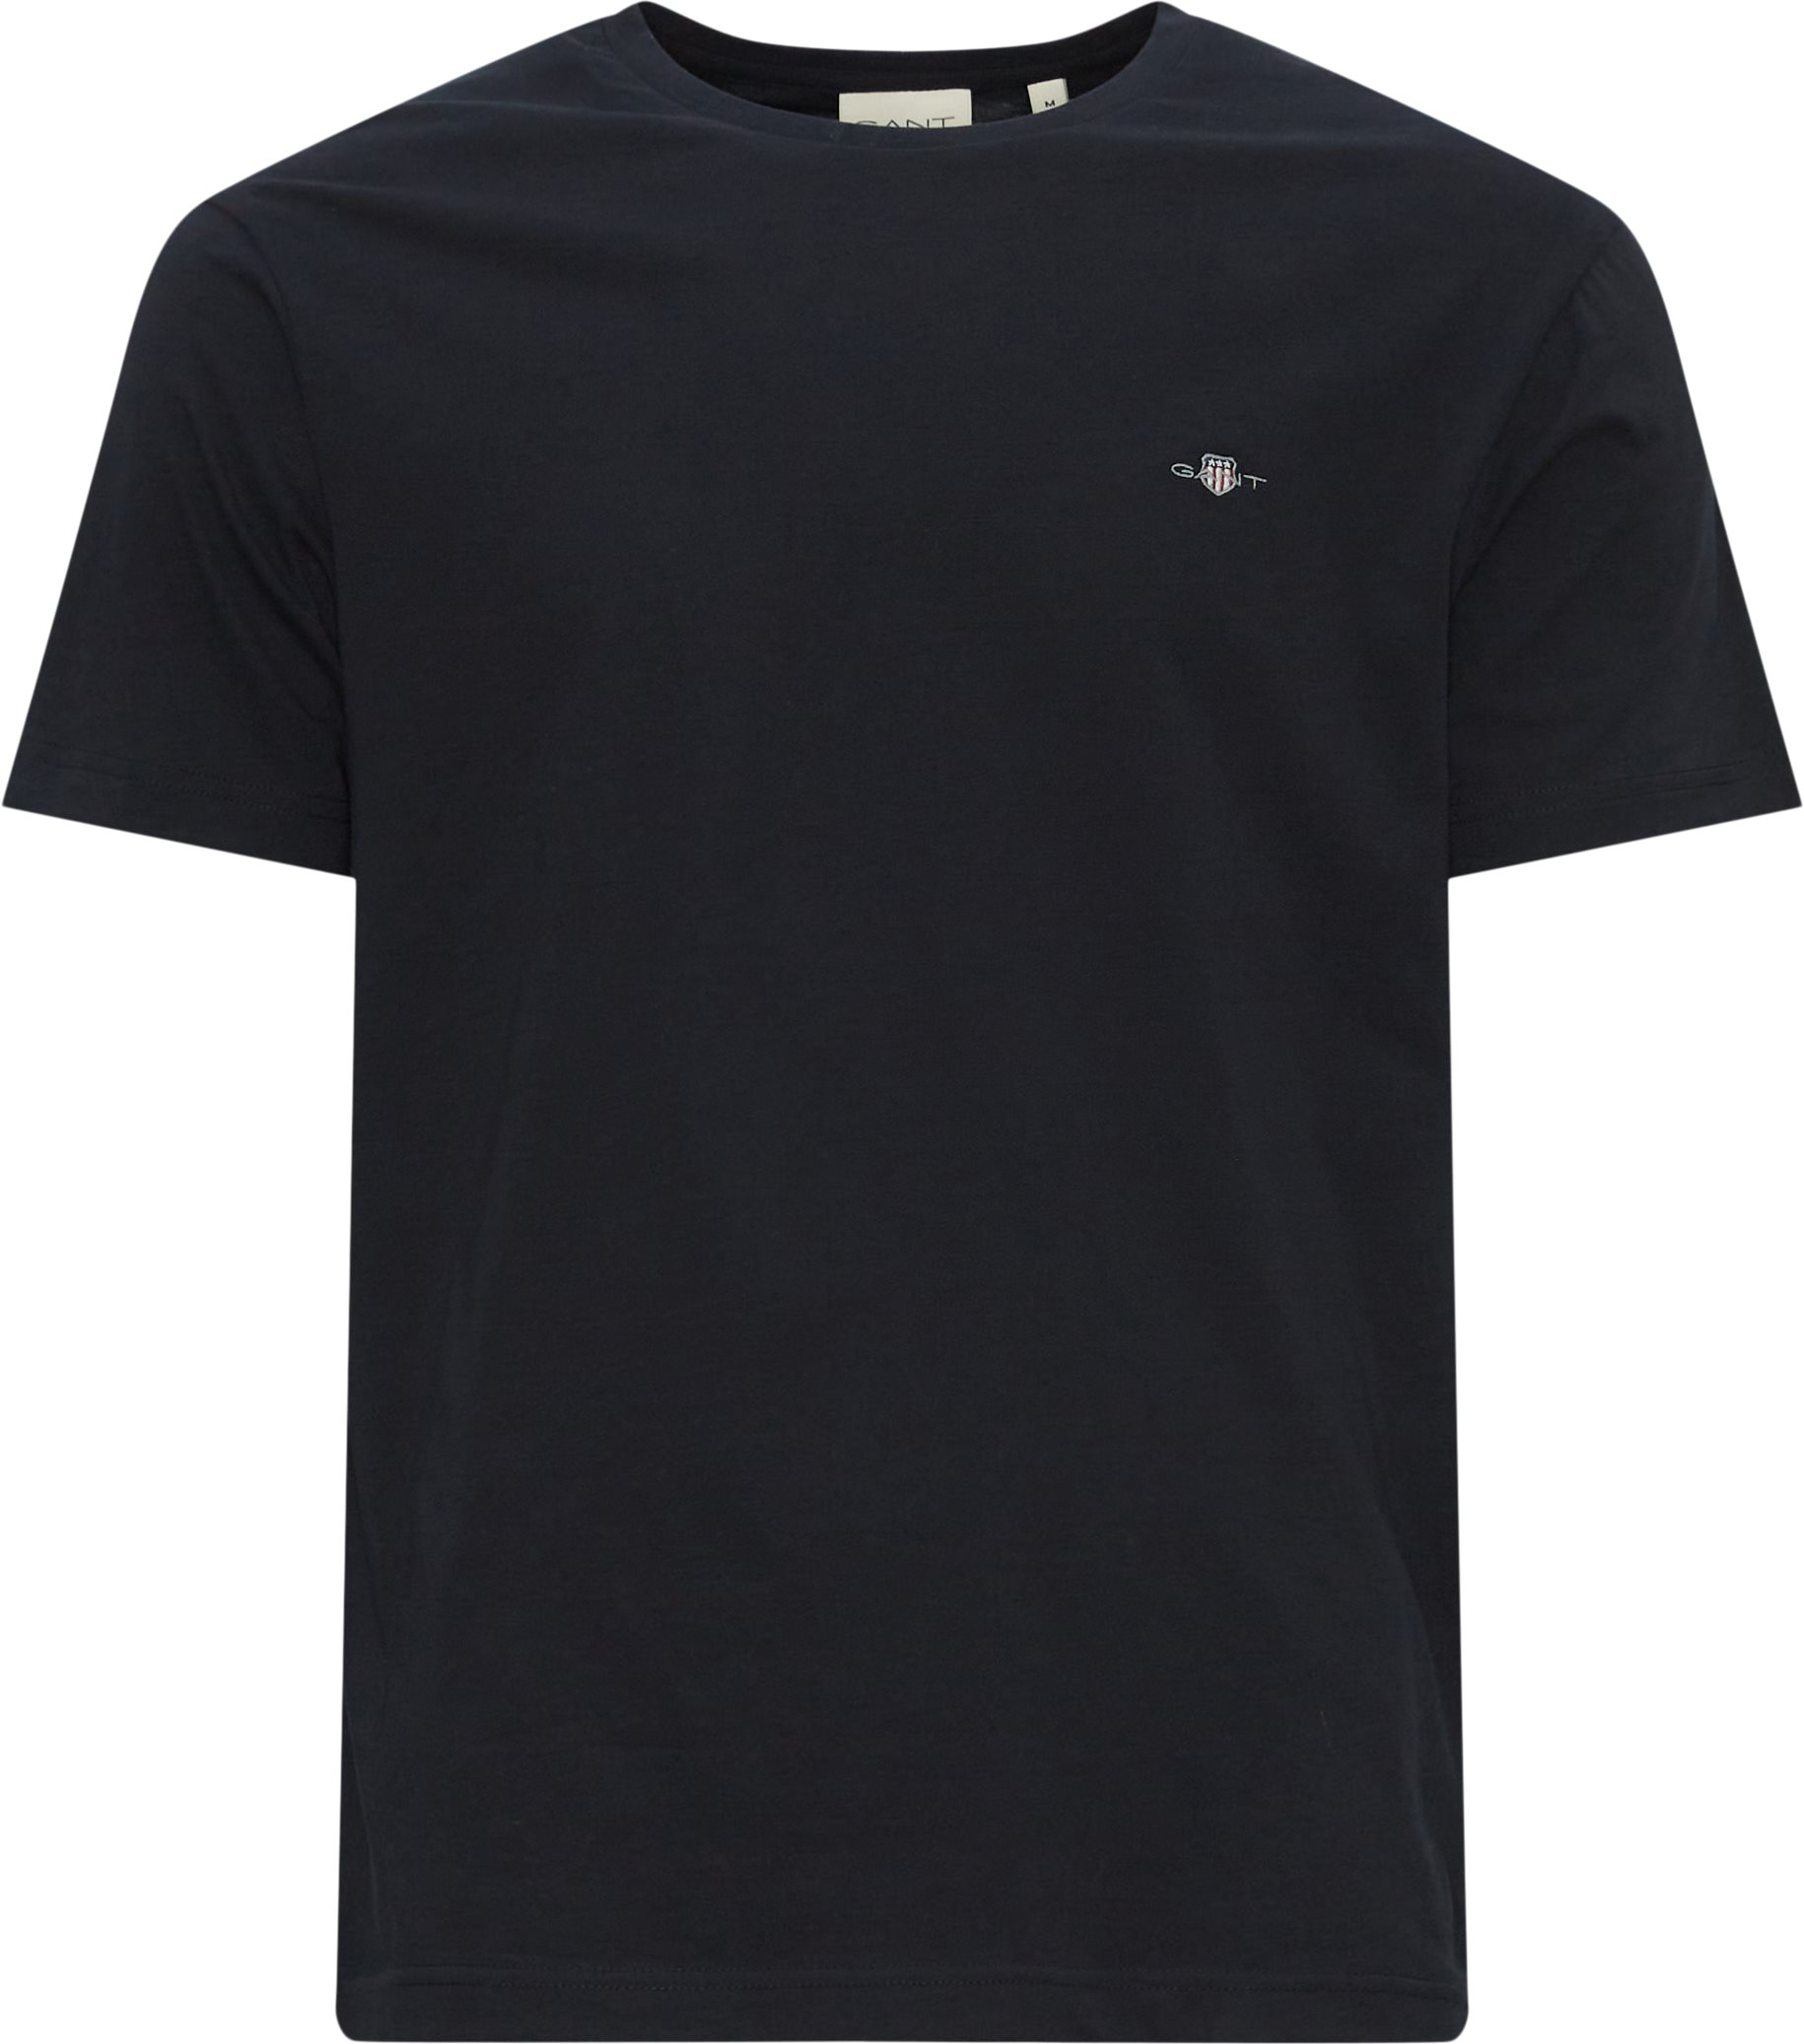 REG SHIELD SS T-SHIRT 2003184 T-shirts BLACK from Gant 54 EUR